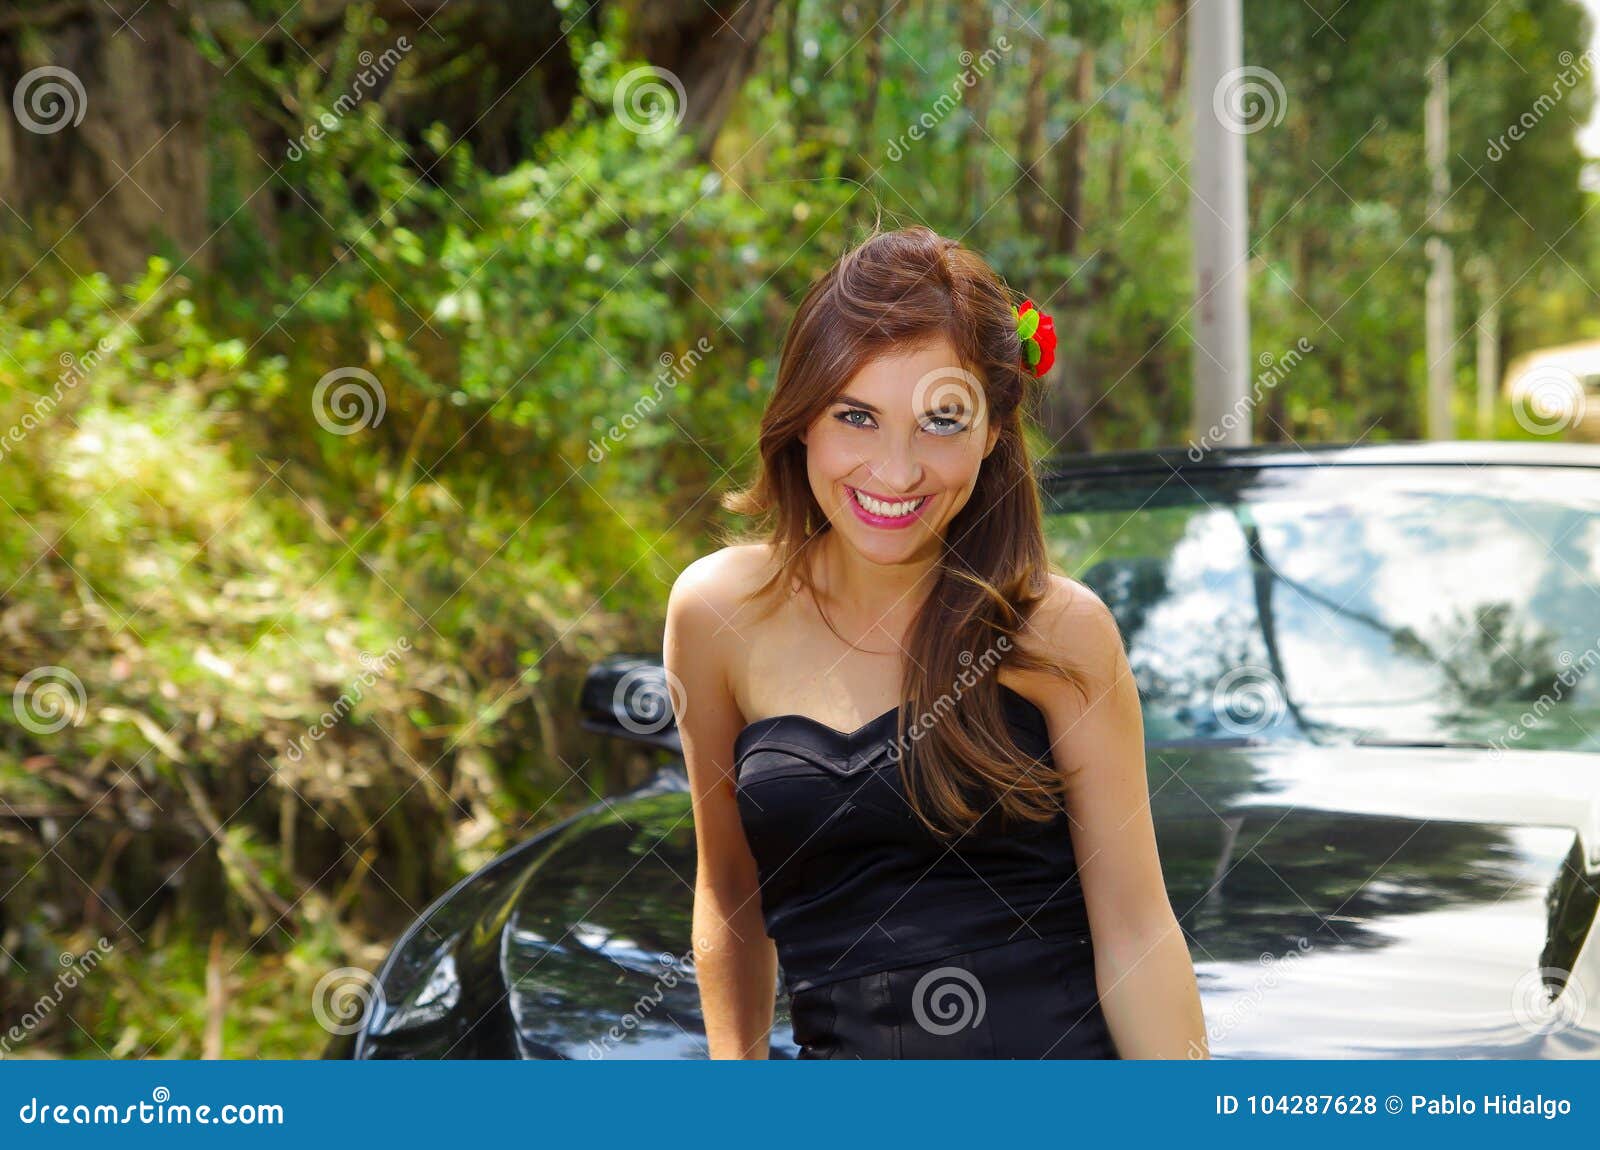 young man posing near car | Men cars photography, Car poses, Mens  photoshoot poses